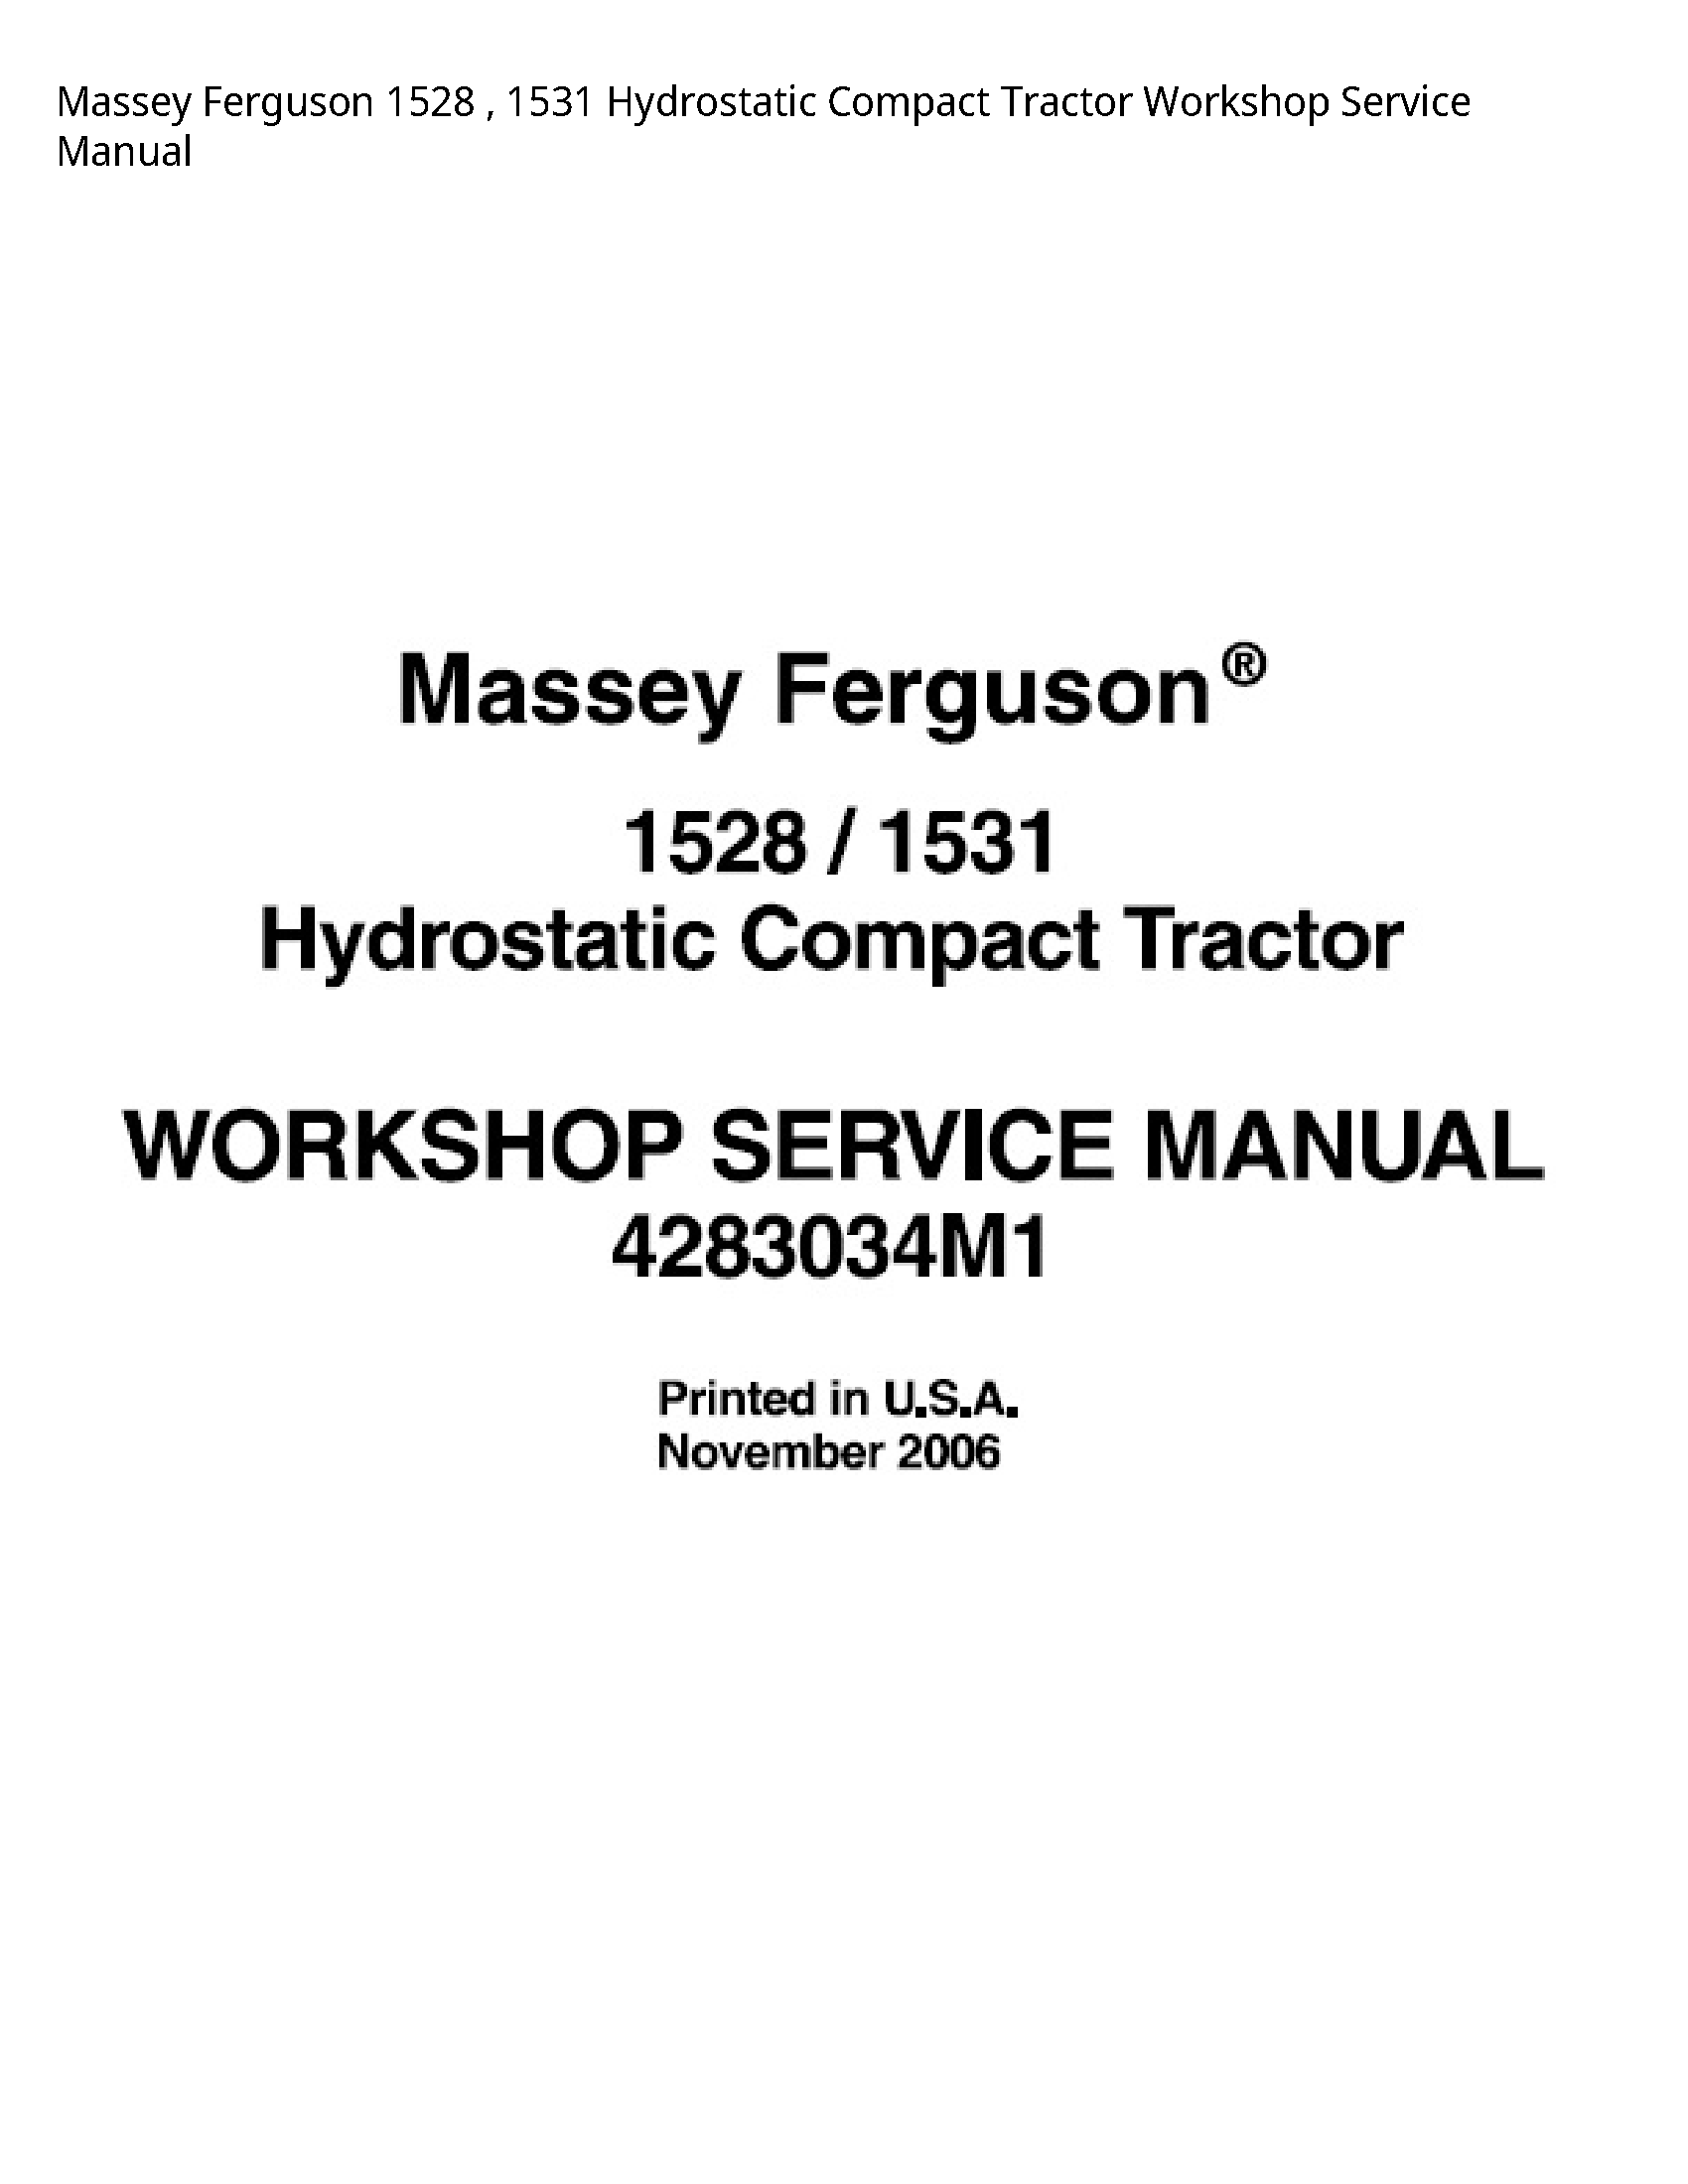 Massey Ferguson 1528 Hydrostatic Compact Tractor Service manual